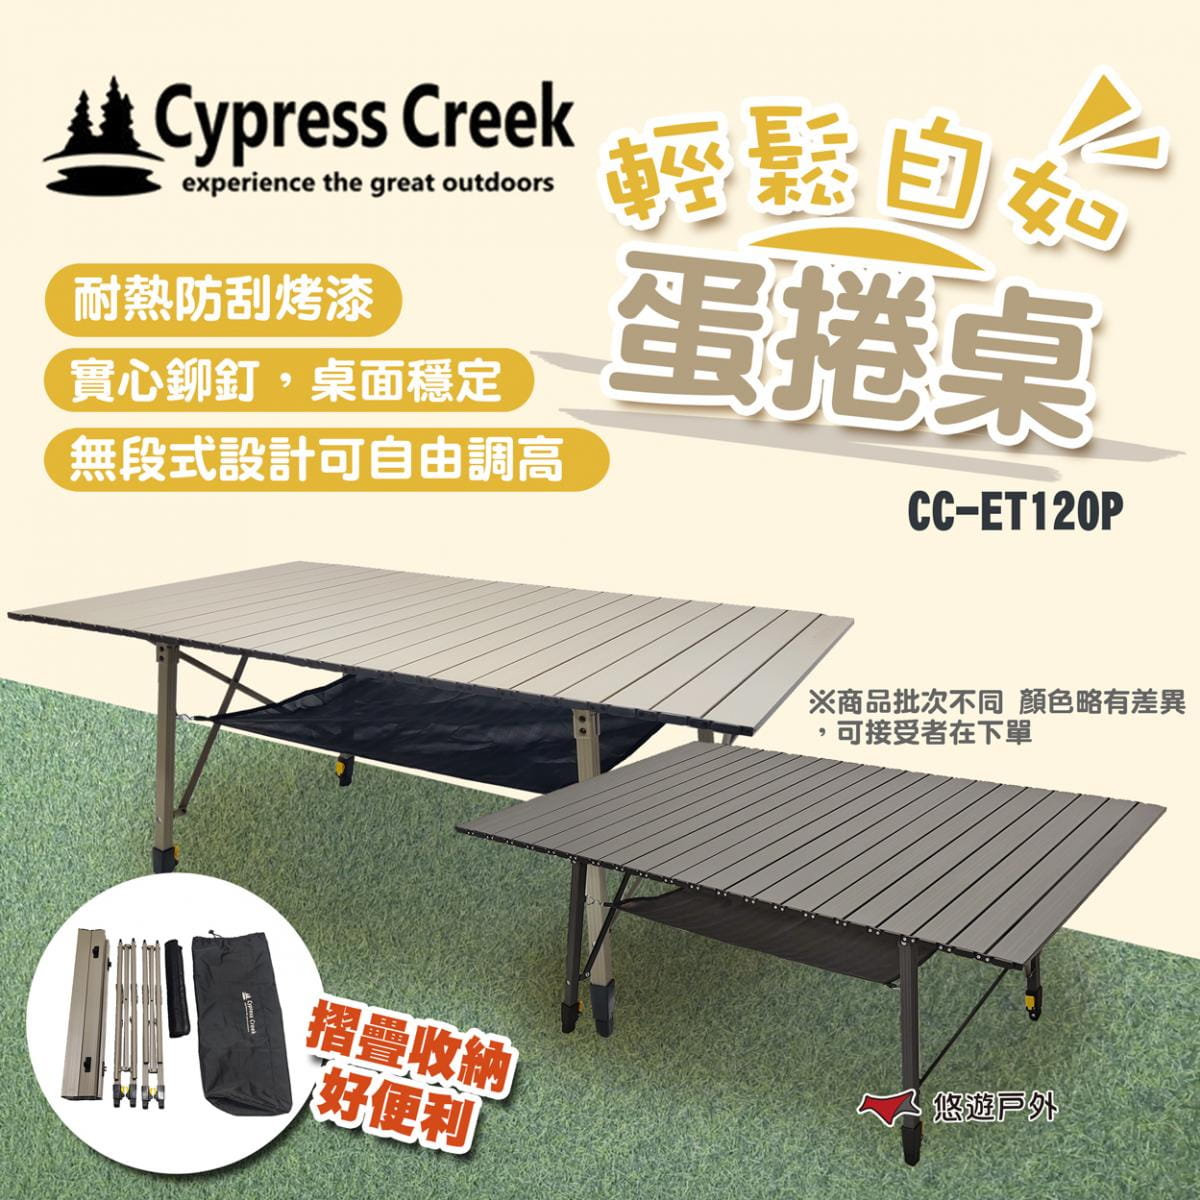 【Cypress Creek】賽普勒斯 CC-ET120P 輕鬆自如蛋捲桌 (悠遊戶外) 1